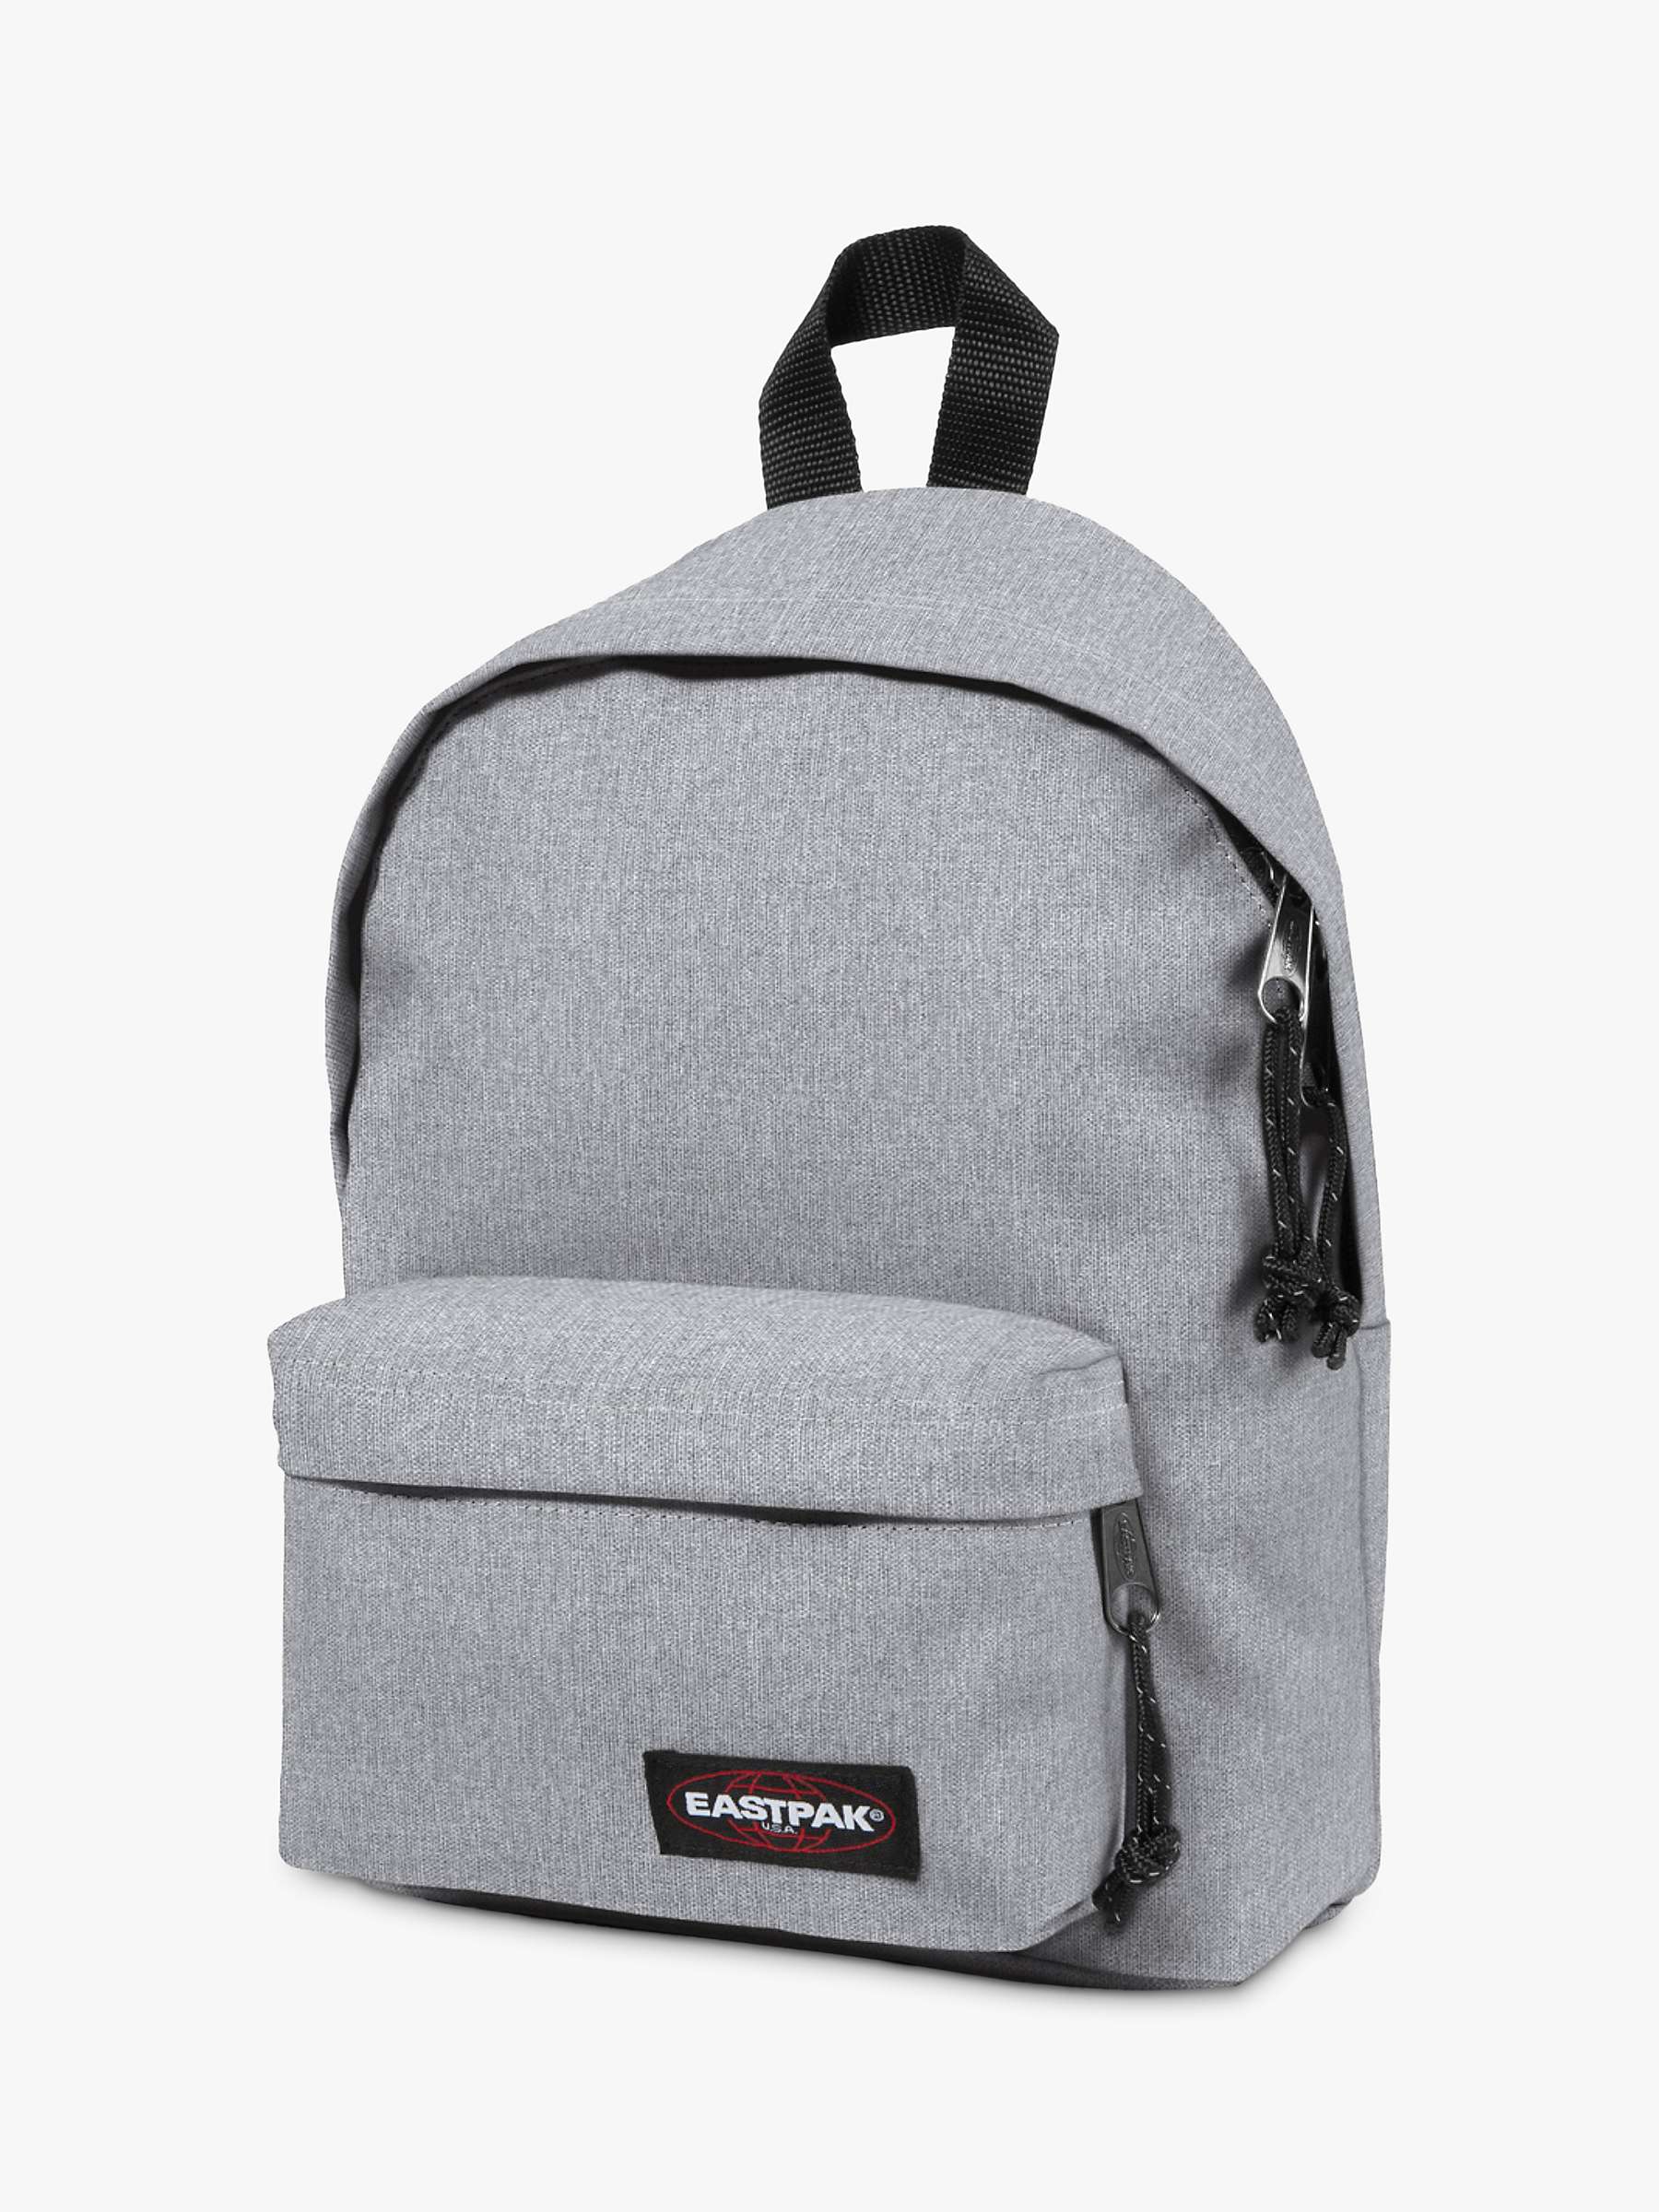 Buy Eastpak Orbit Backpack Online at johnlewis.com